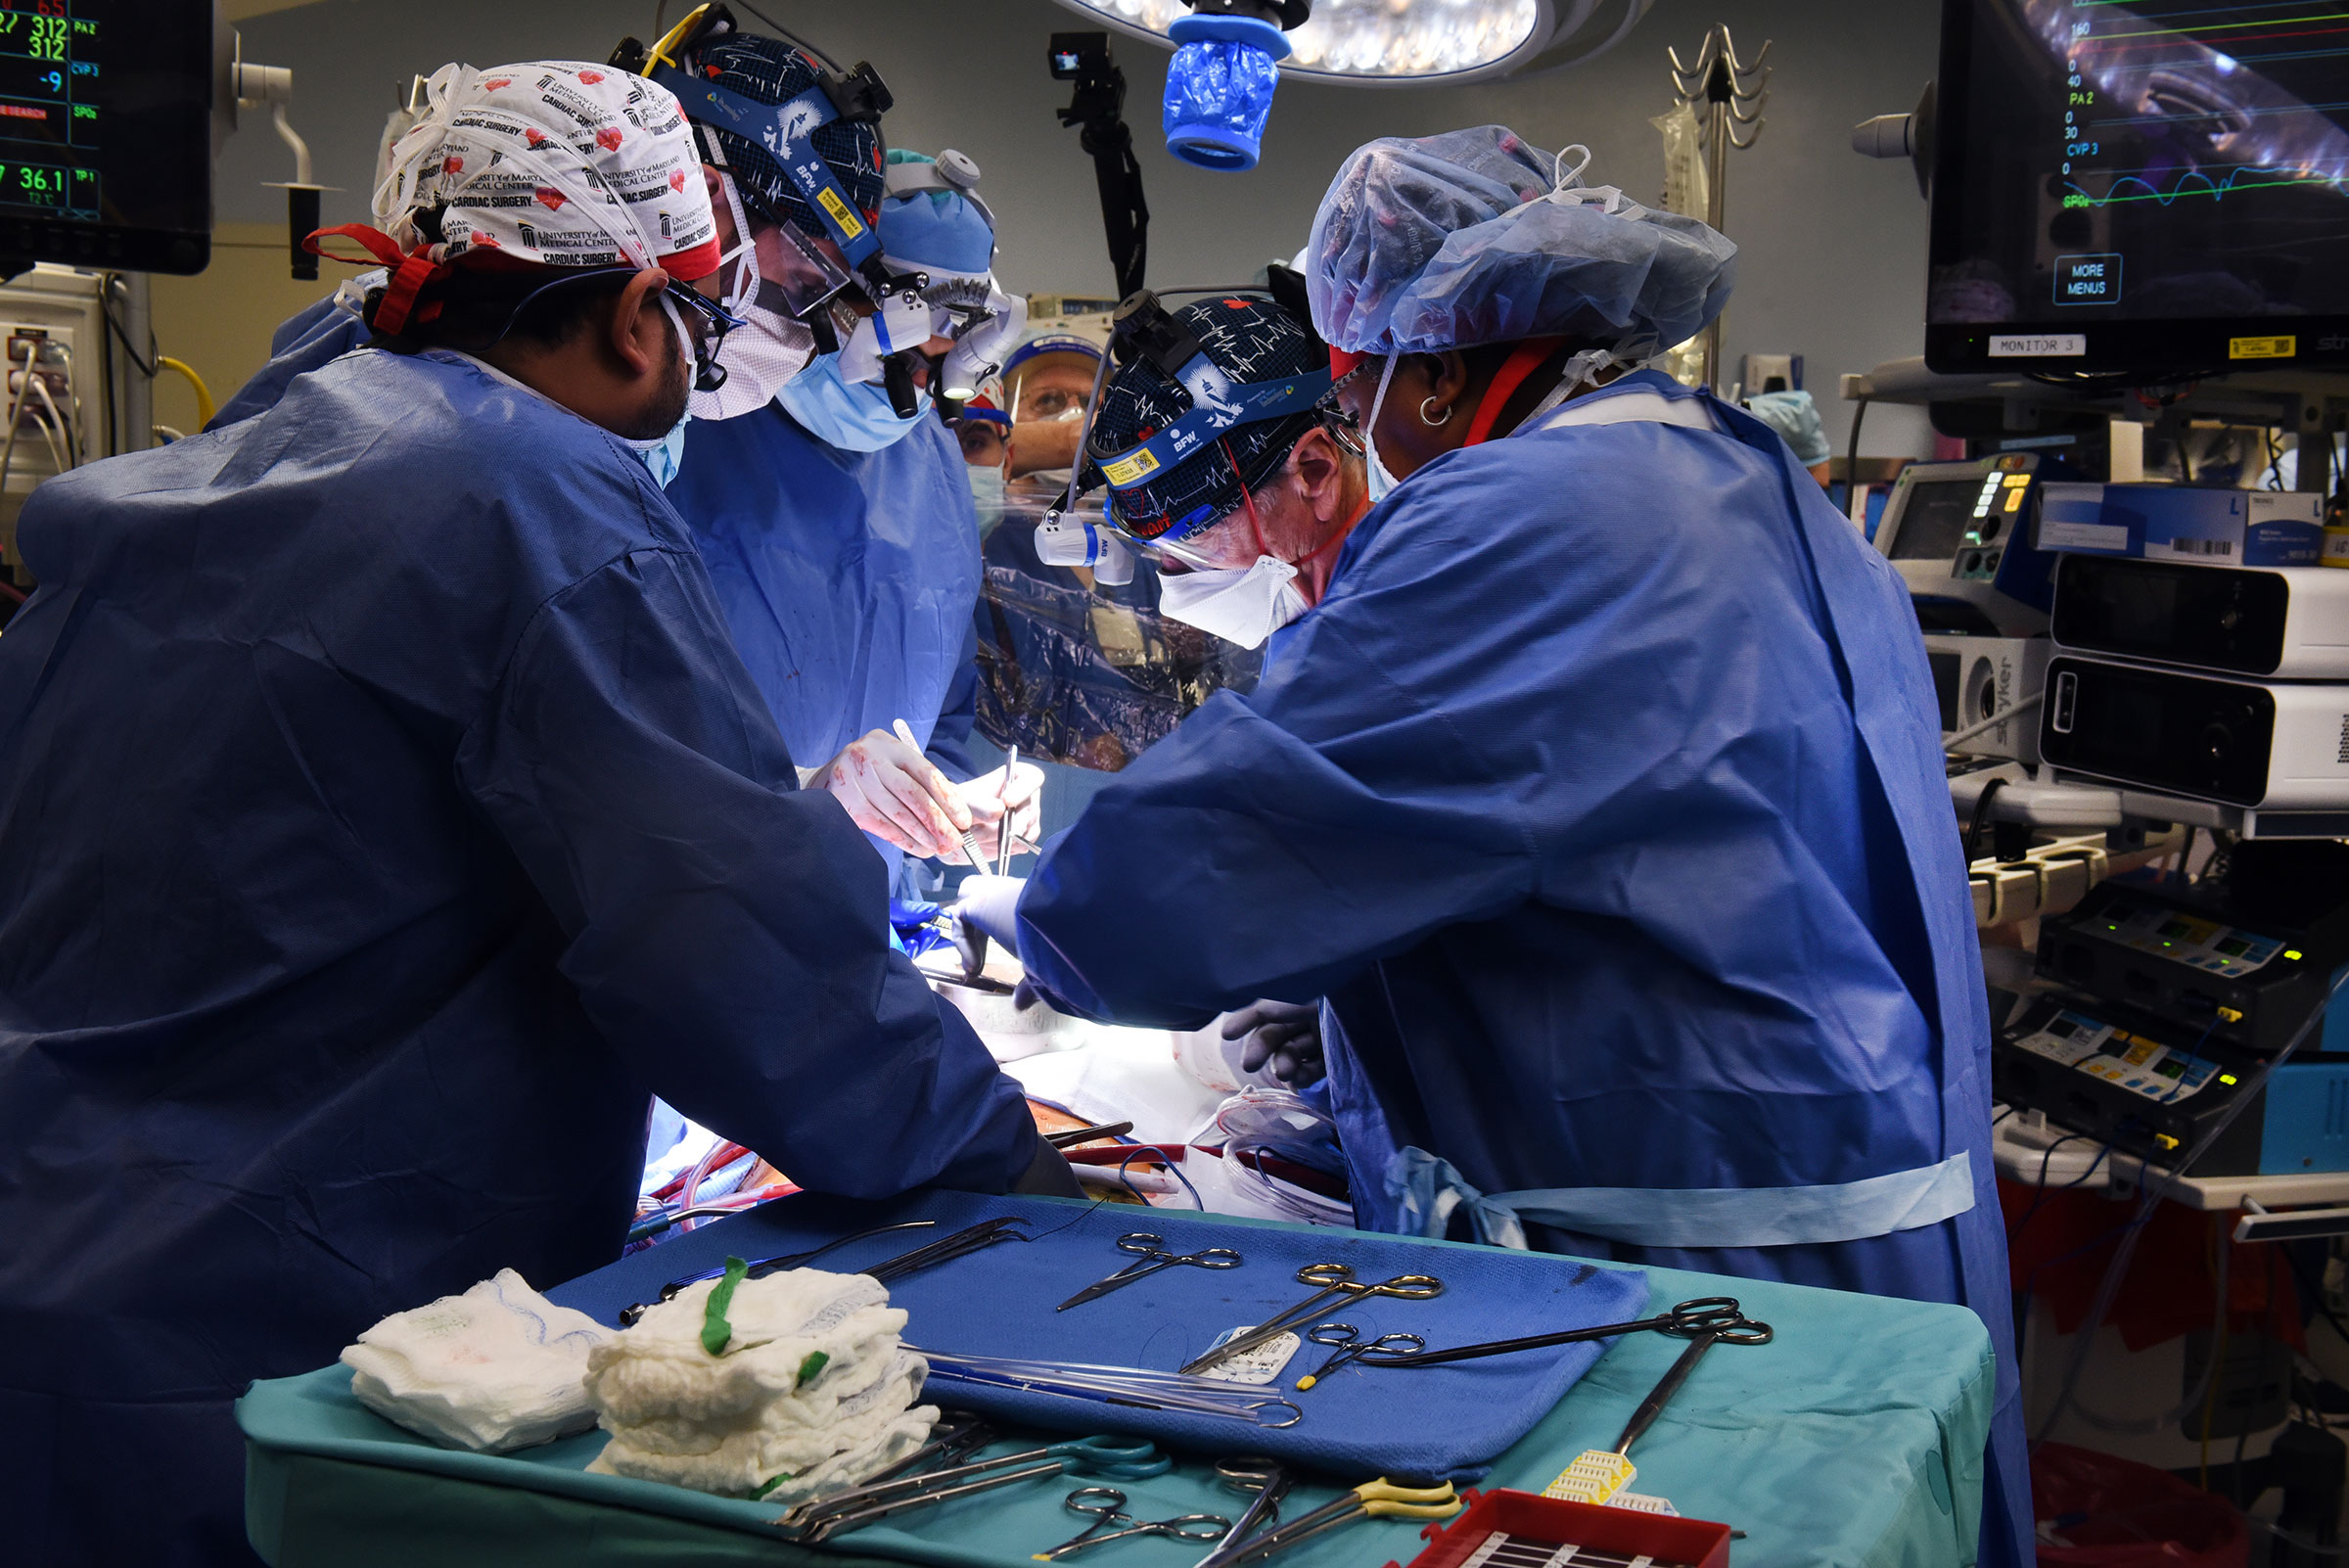 U.S surgeons transplant pig heart into human patient